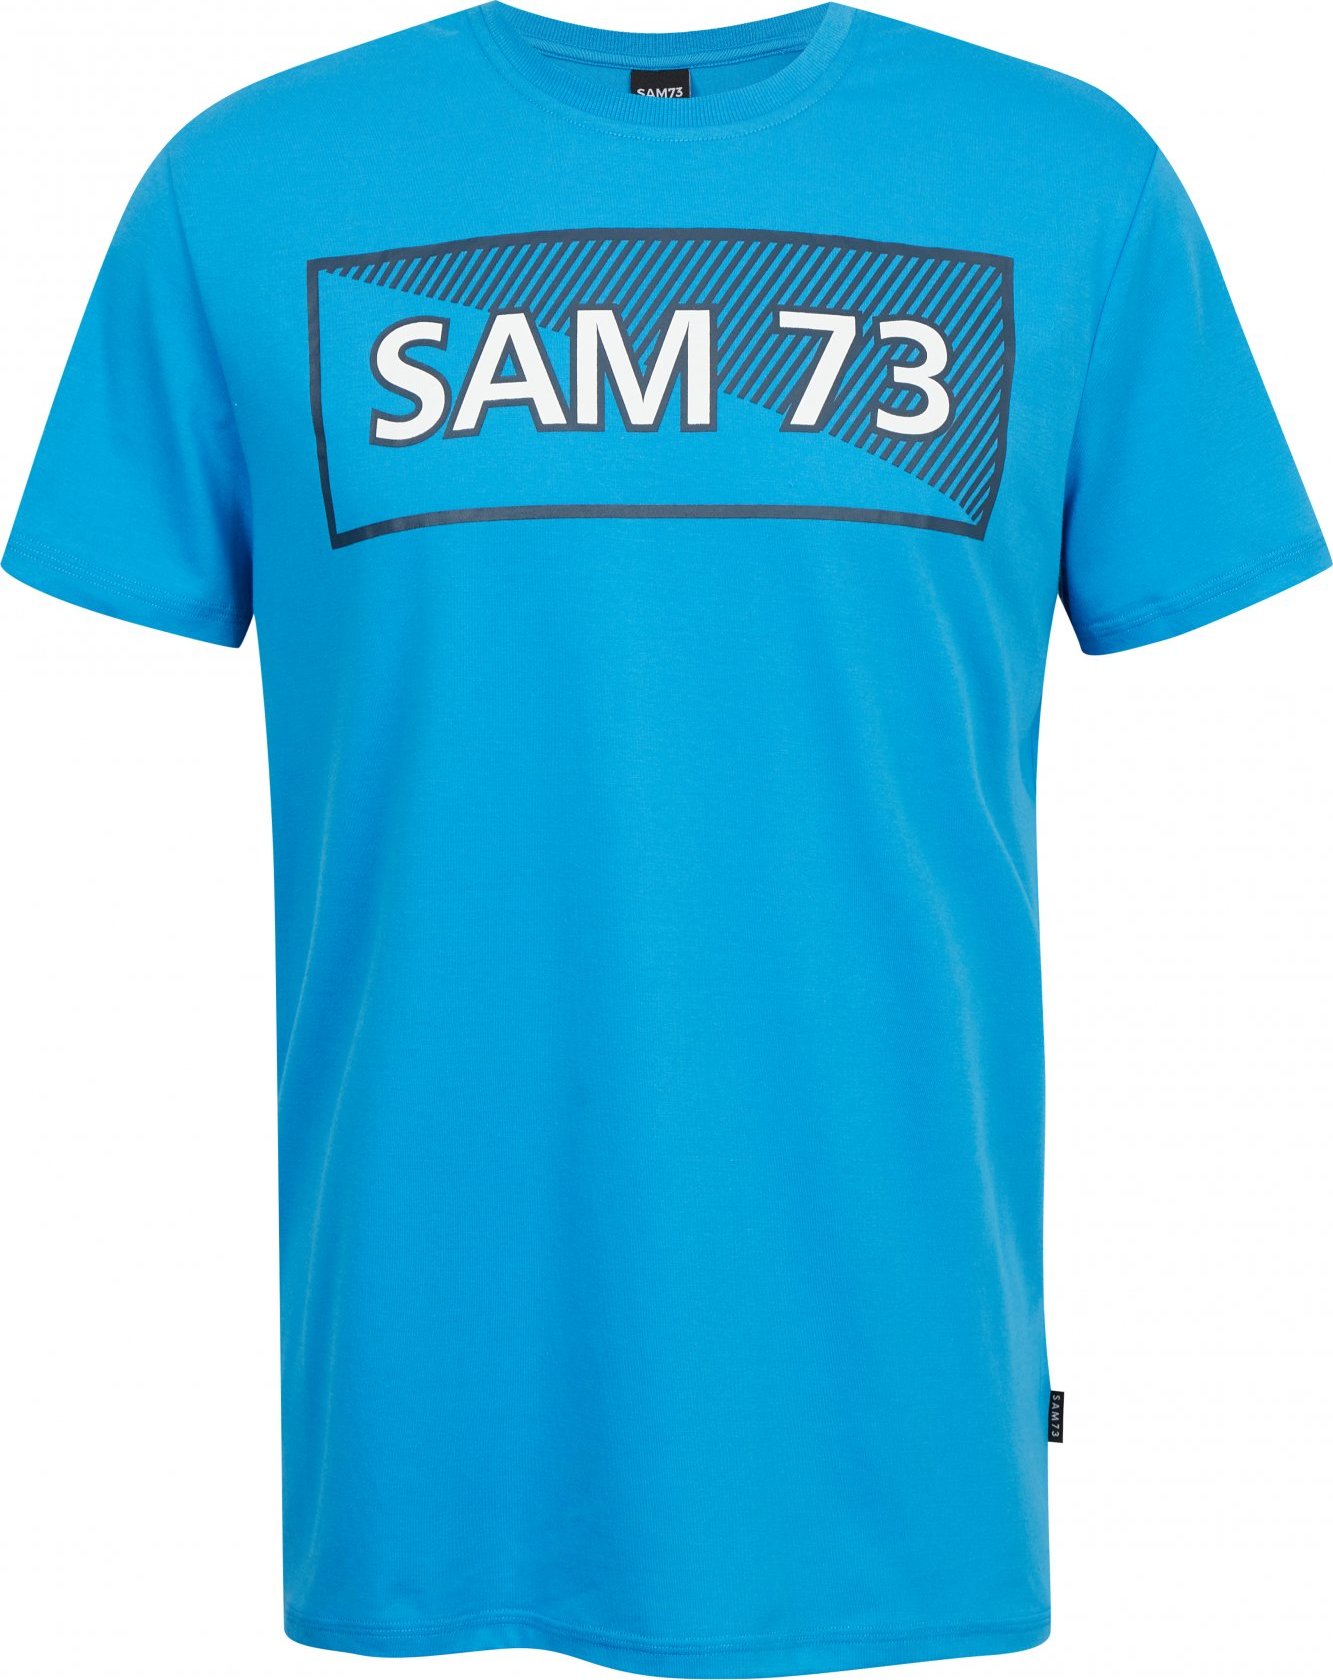 Pánské triko SAM73 fenri modré Velikost: XL